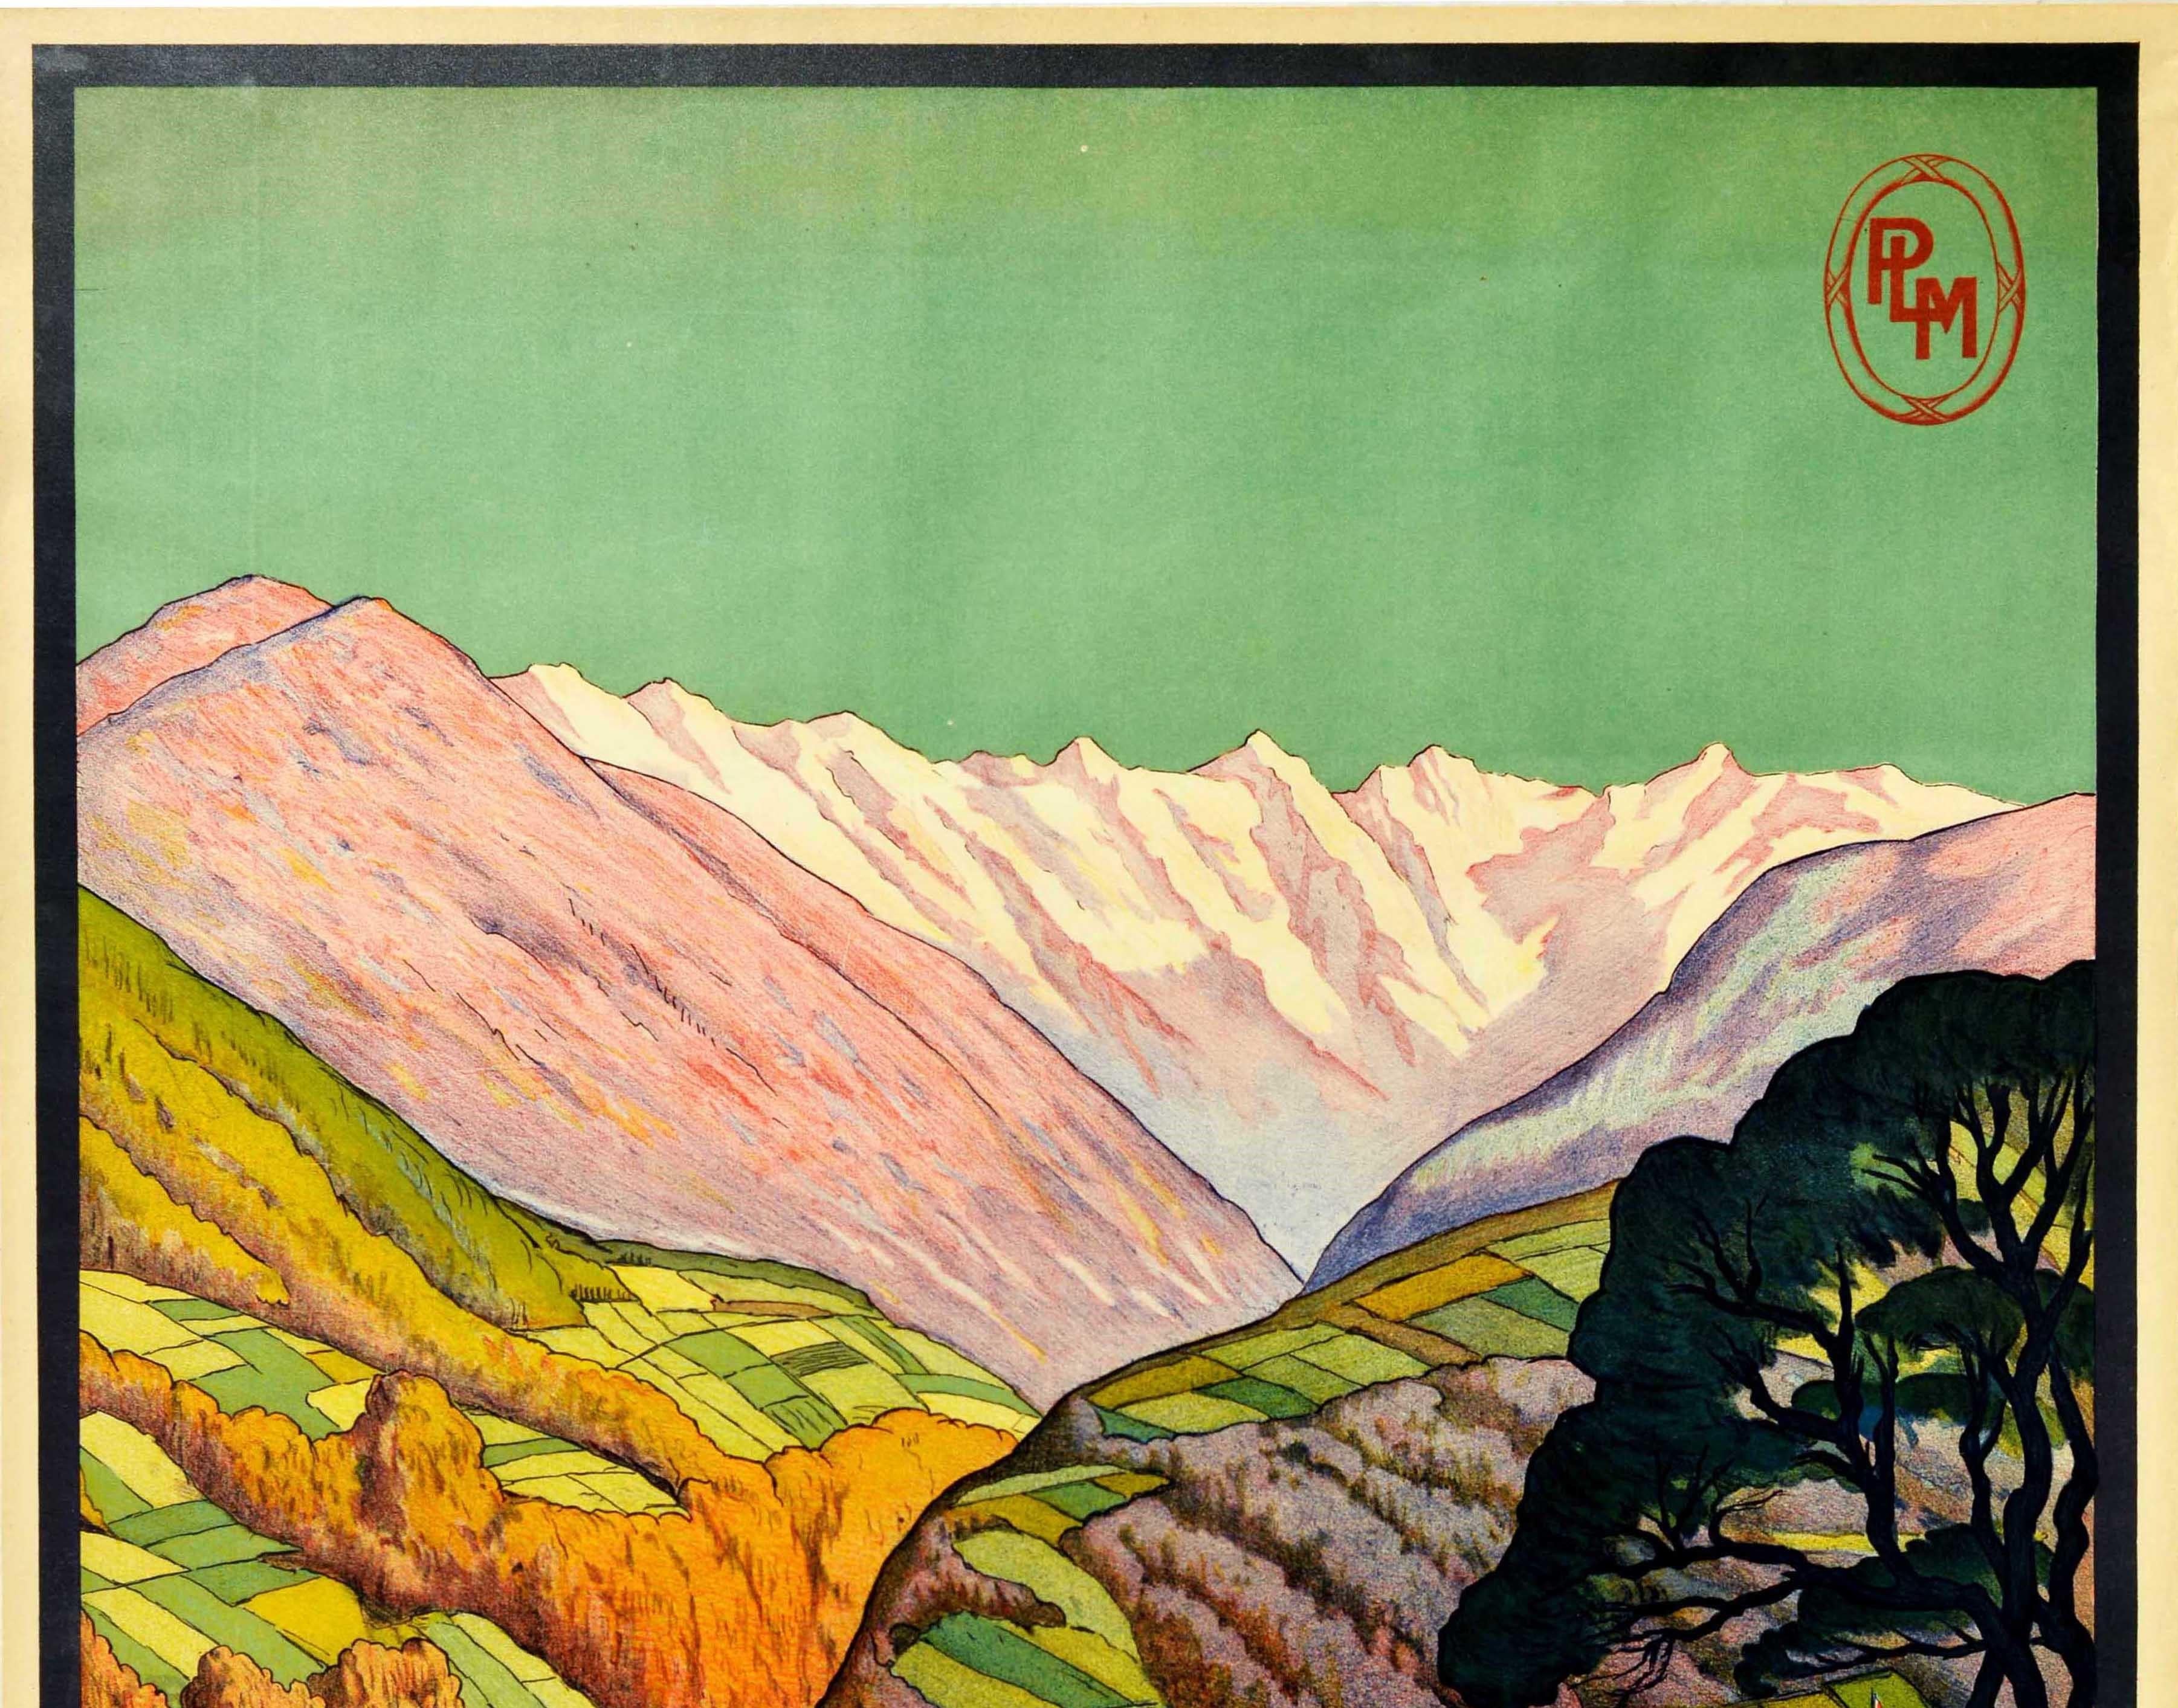 Original Vintage PLM Railway Travel Poster Allevard Les Bains Thermal Spa Alps - Print by Jean Julien